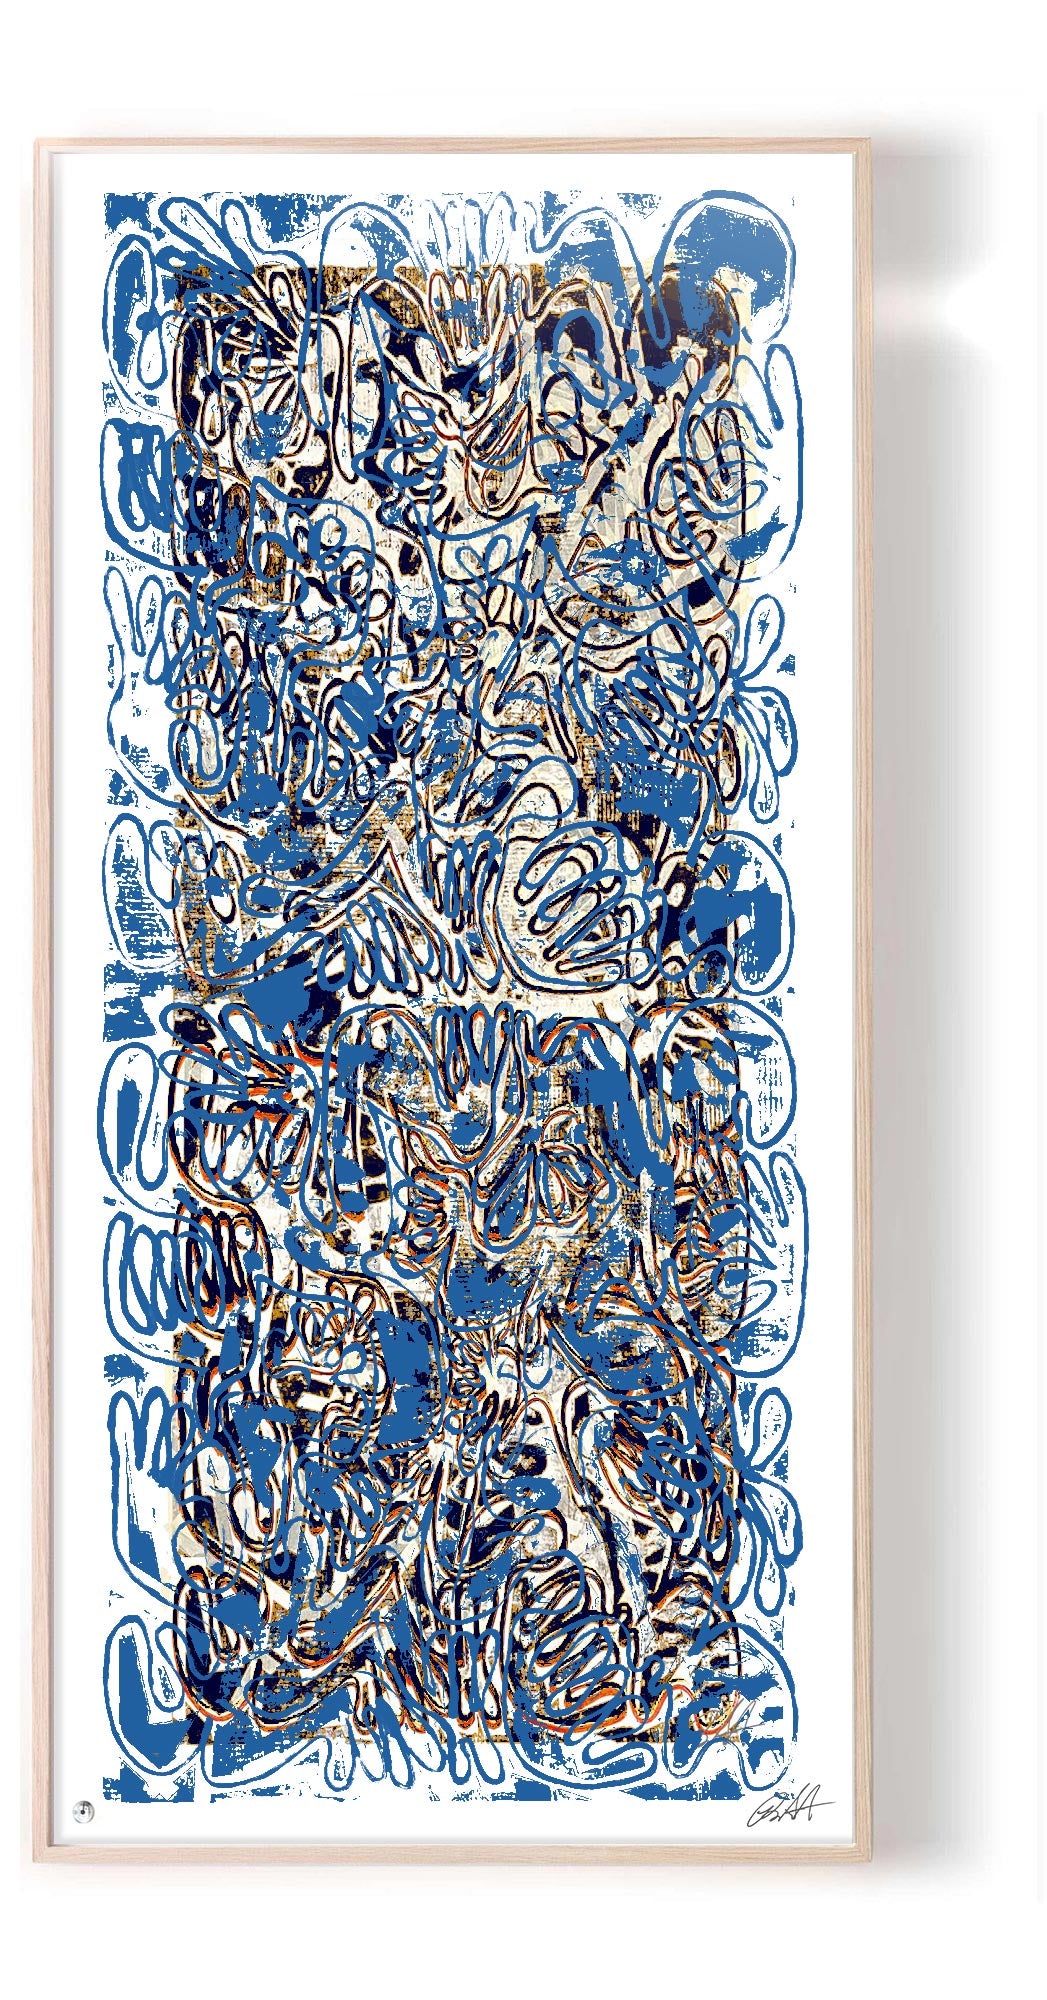 COVID CHAOS Tiger TailRobert Santoré 2022 © 40 x 100in (101.6 x 254cm) Silkscreen, high gloss enamel on 100% cotton rag w/NFC chip from $1,000 to 10,50